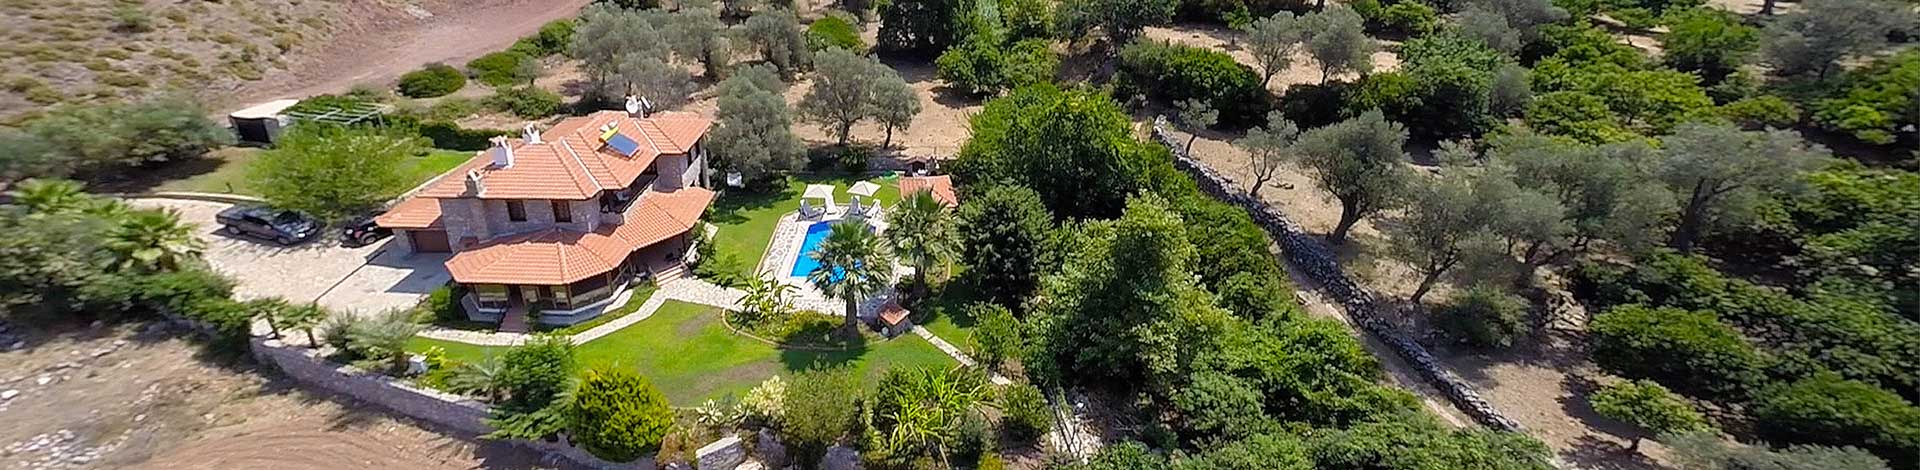 Luxurious Villa With Pool in Turkey